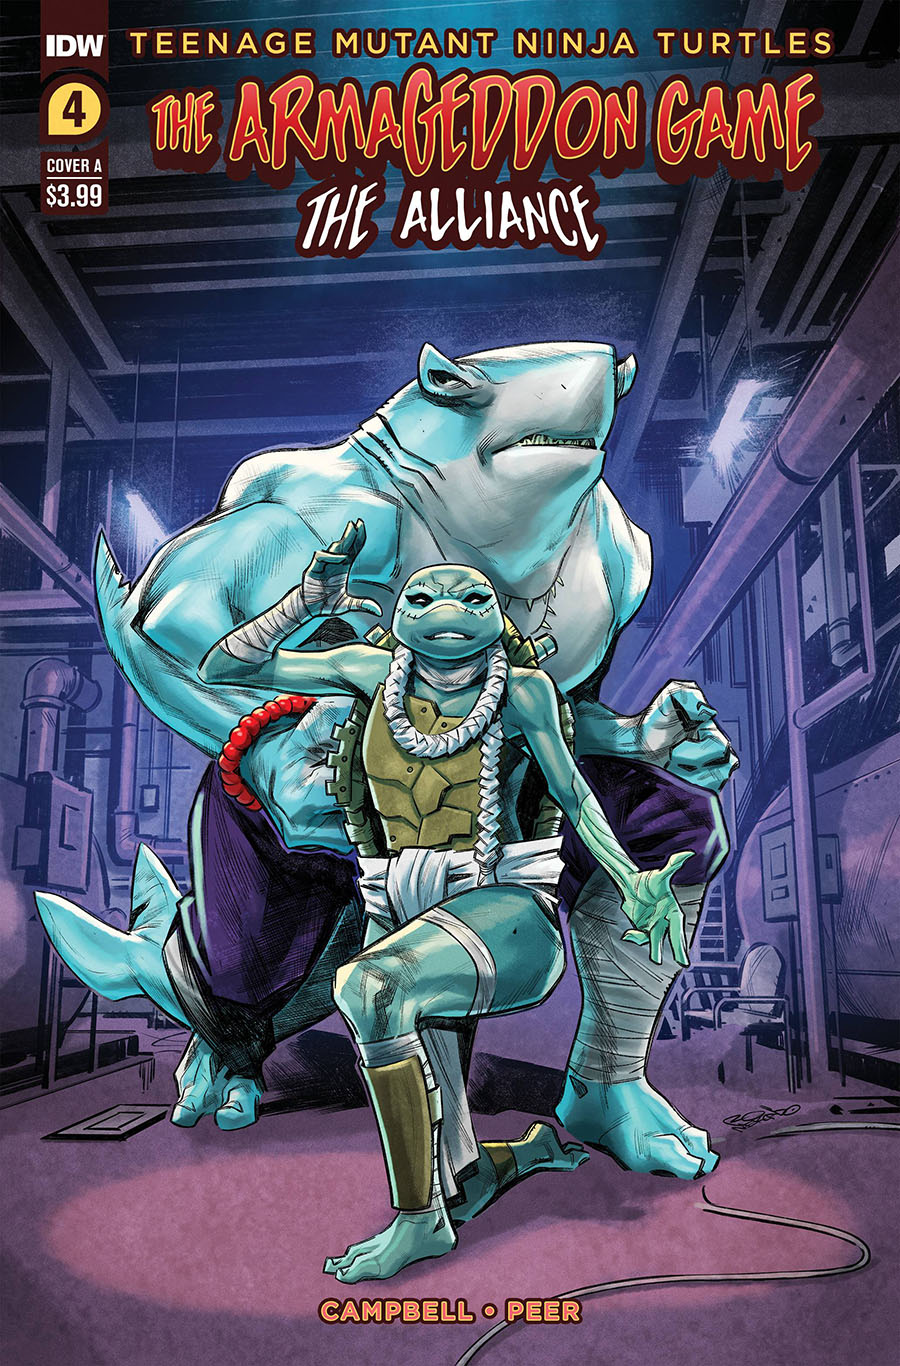 Teenage Mutant Ninja Turtles Armageddon Game The Alliance #4 Cover A Regular Roi Mercado Cover